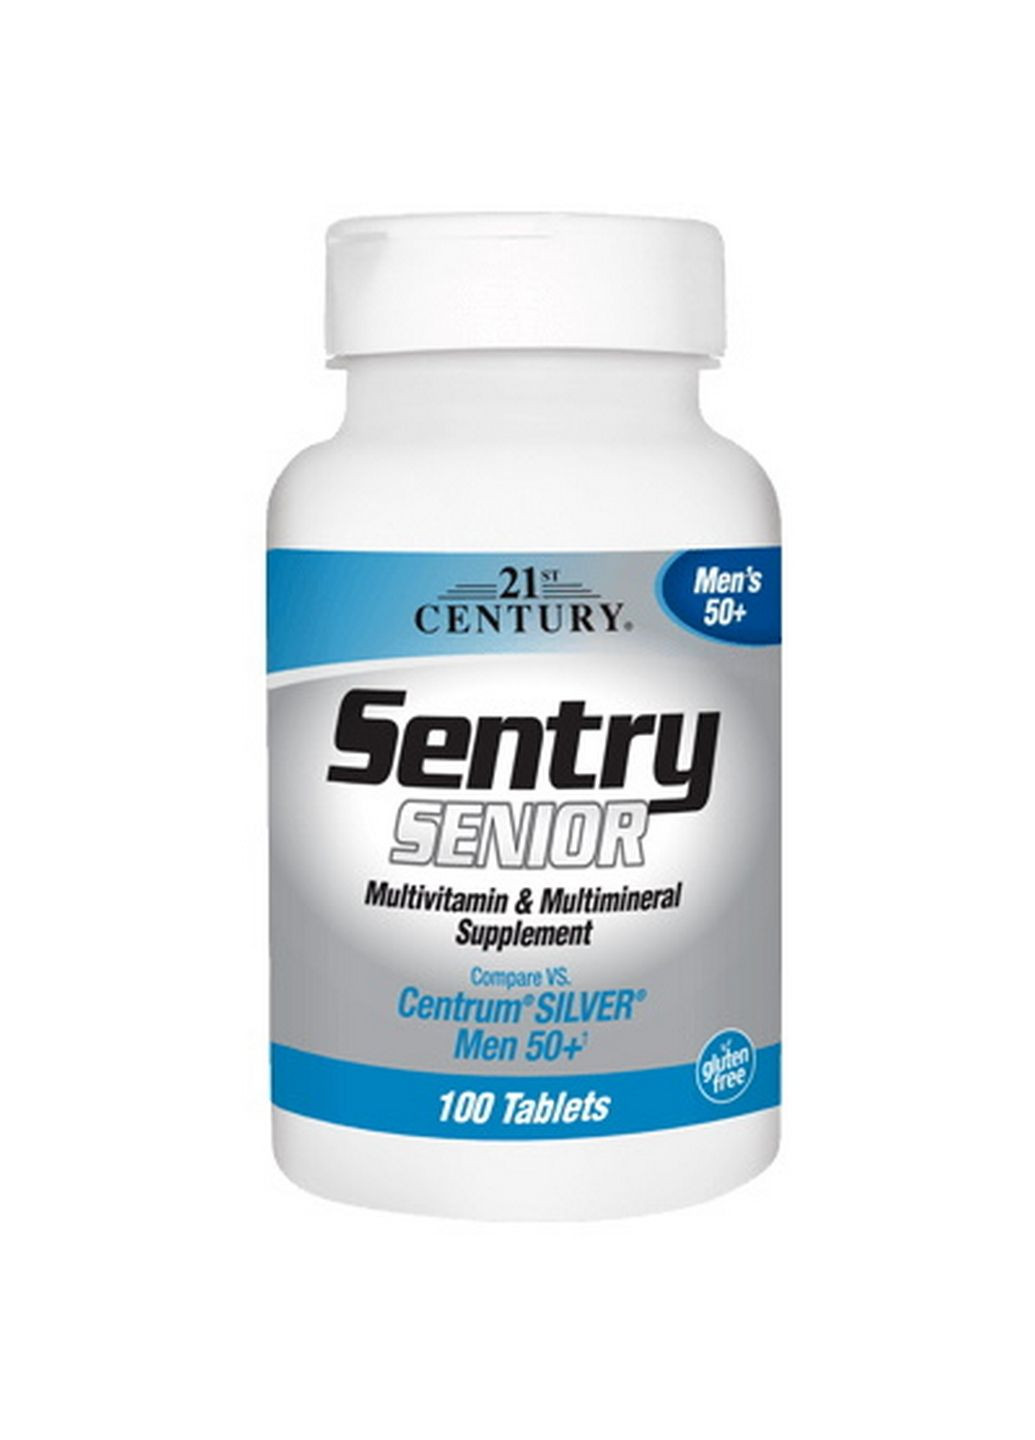 Витамины и минералы Sentry Senior Mens 50+, 100 таблеток 21st Century (293417027)